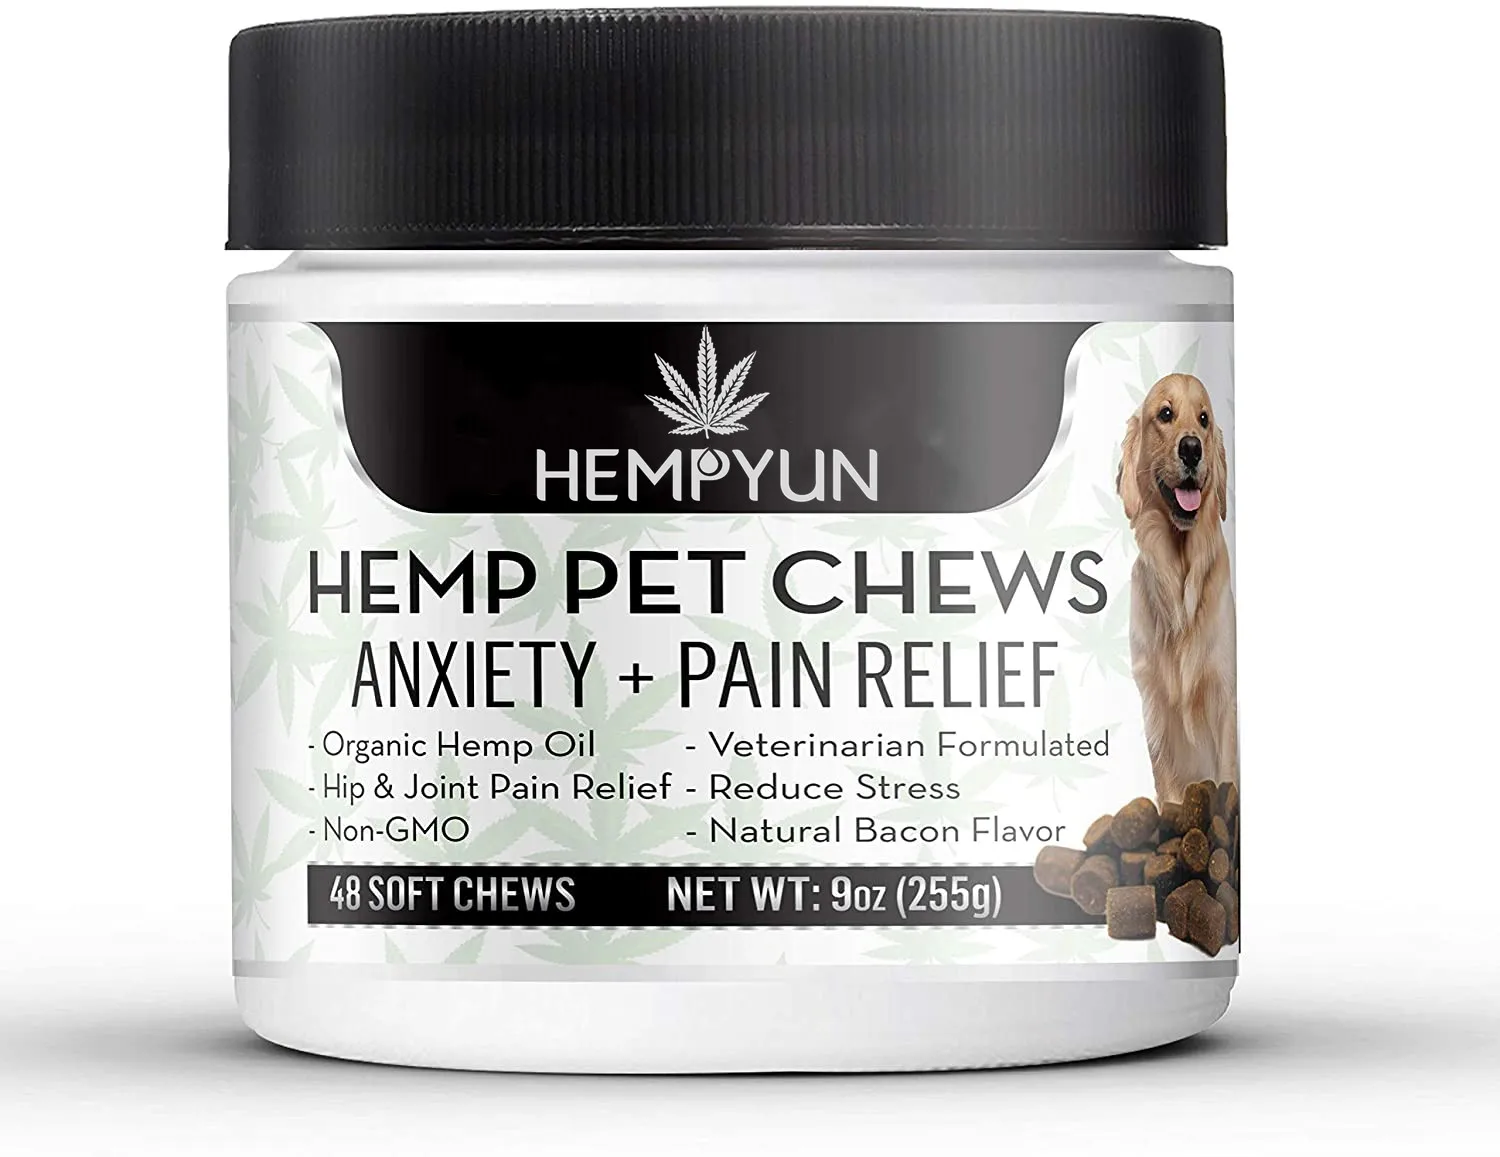 

Hempyun-In Stock Private Label CBD Dog Treats Organic Hemp Pets treats chew food for Anxiety Relief & Calming